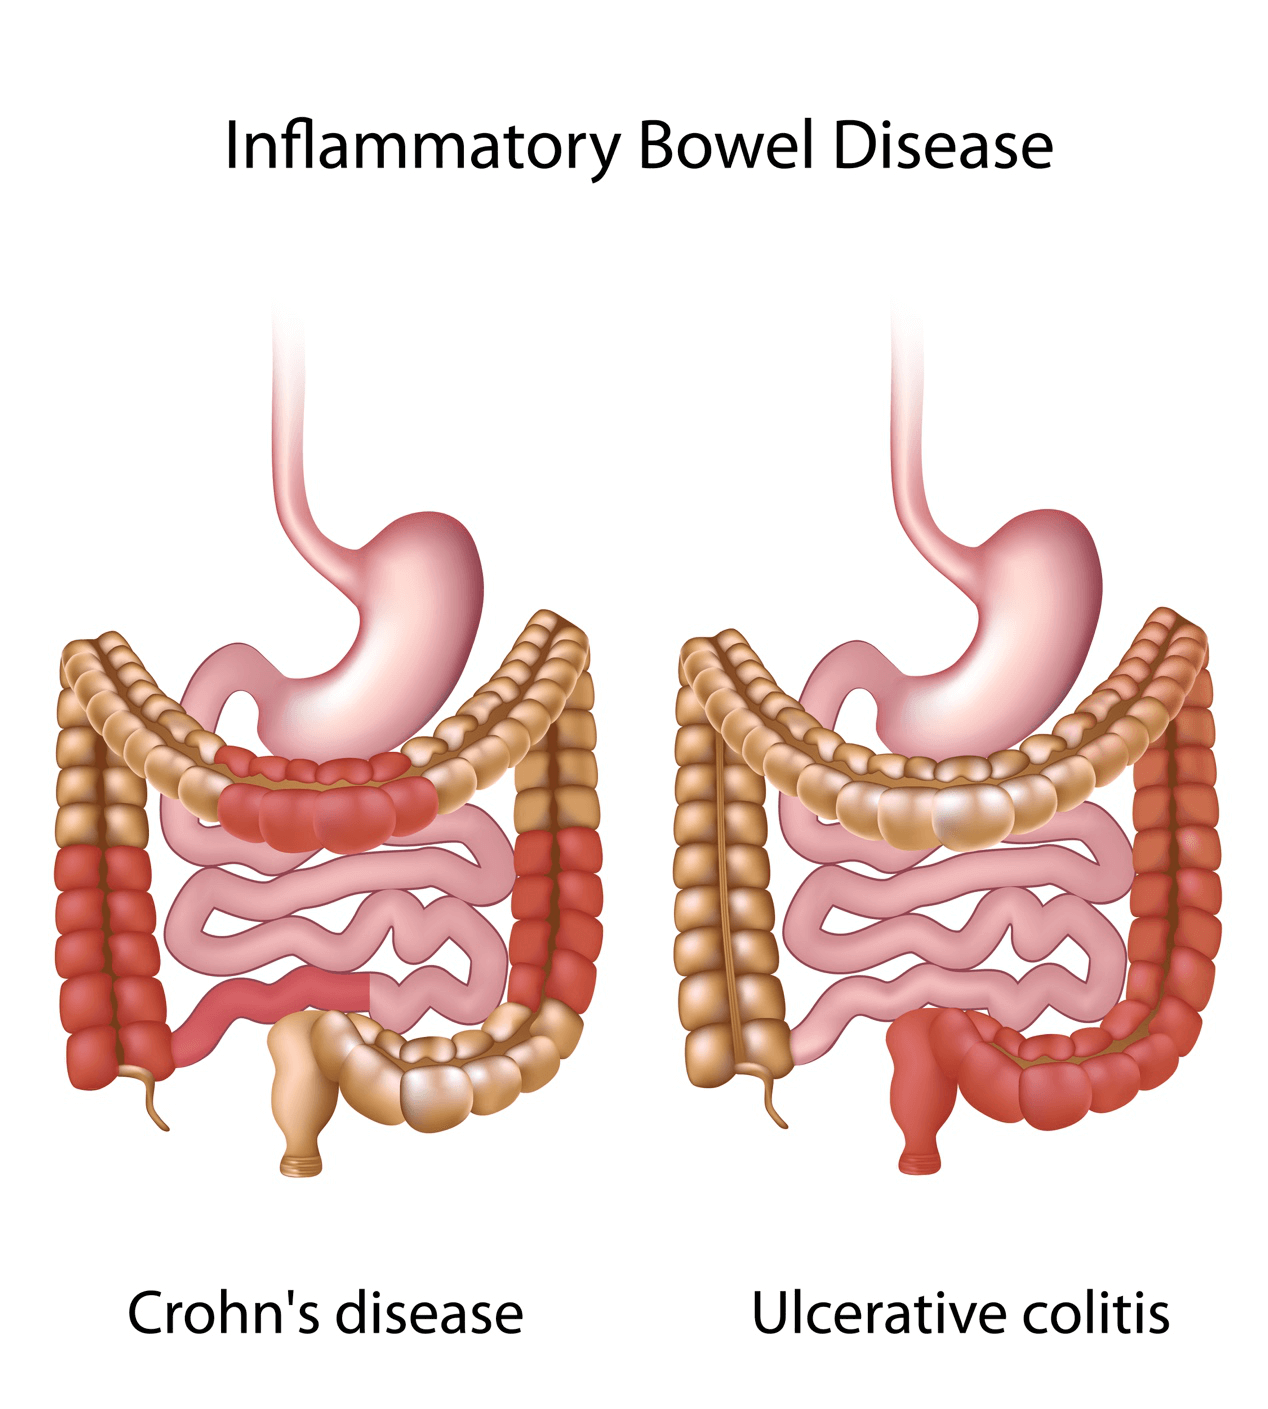 Crohn’s disease